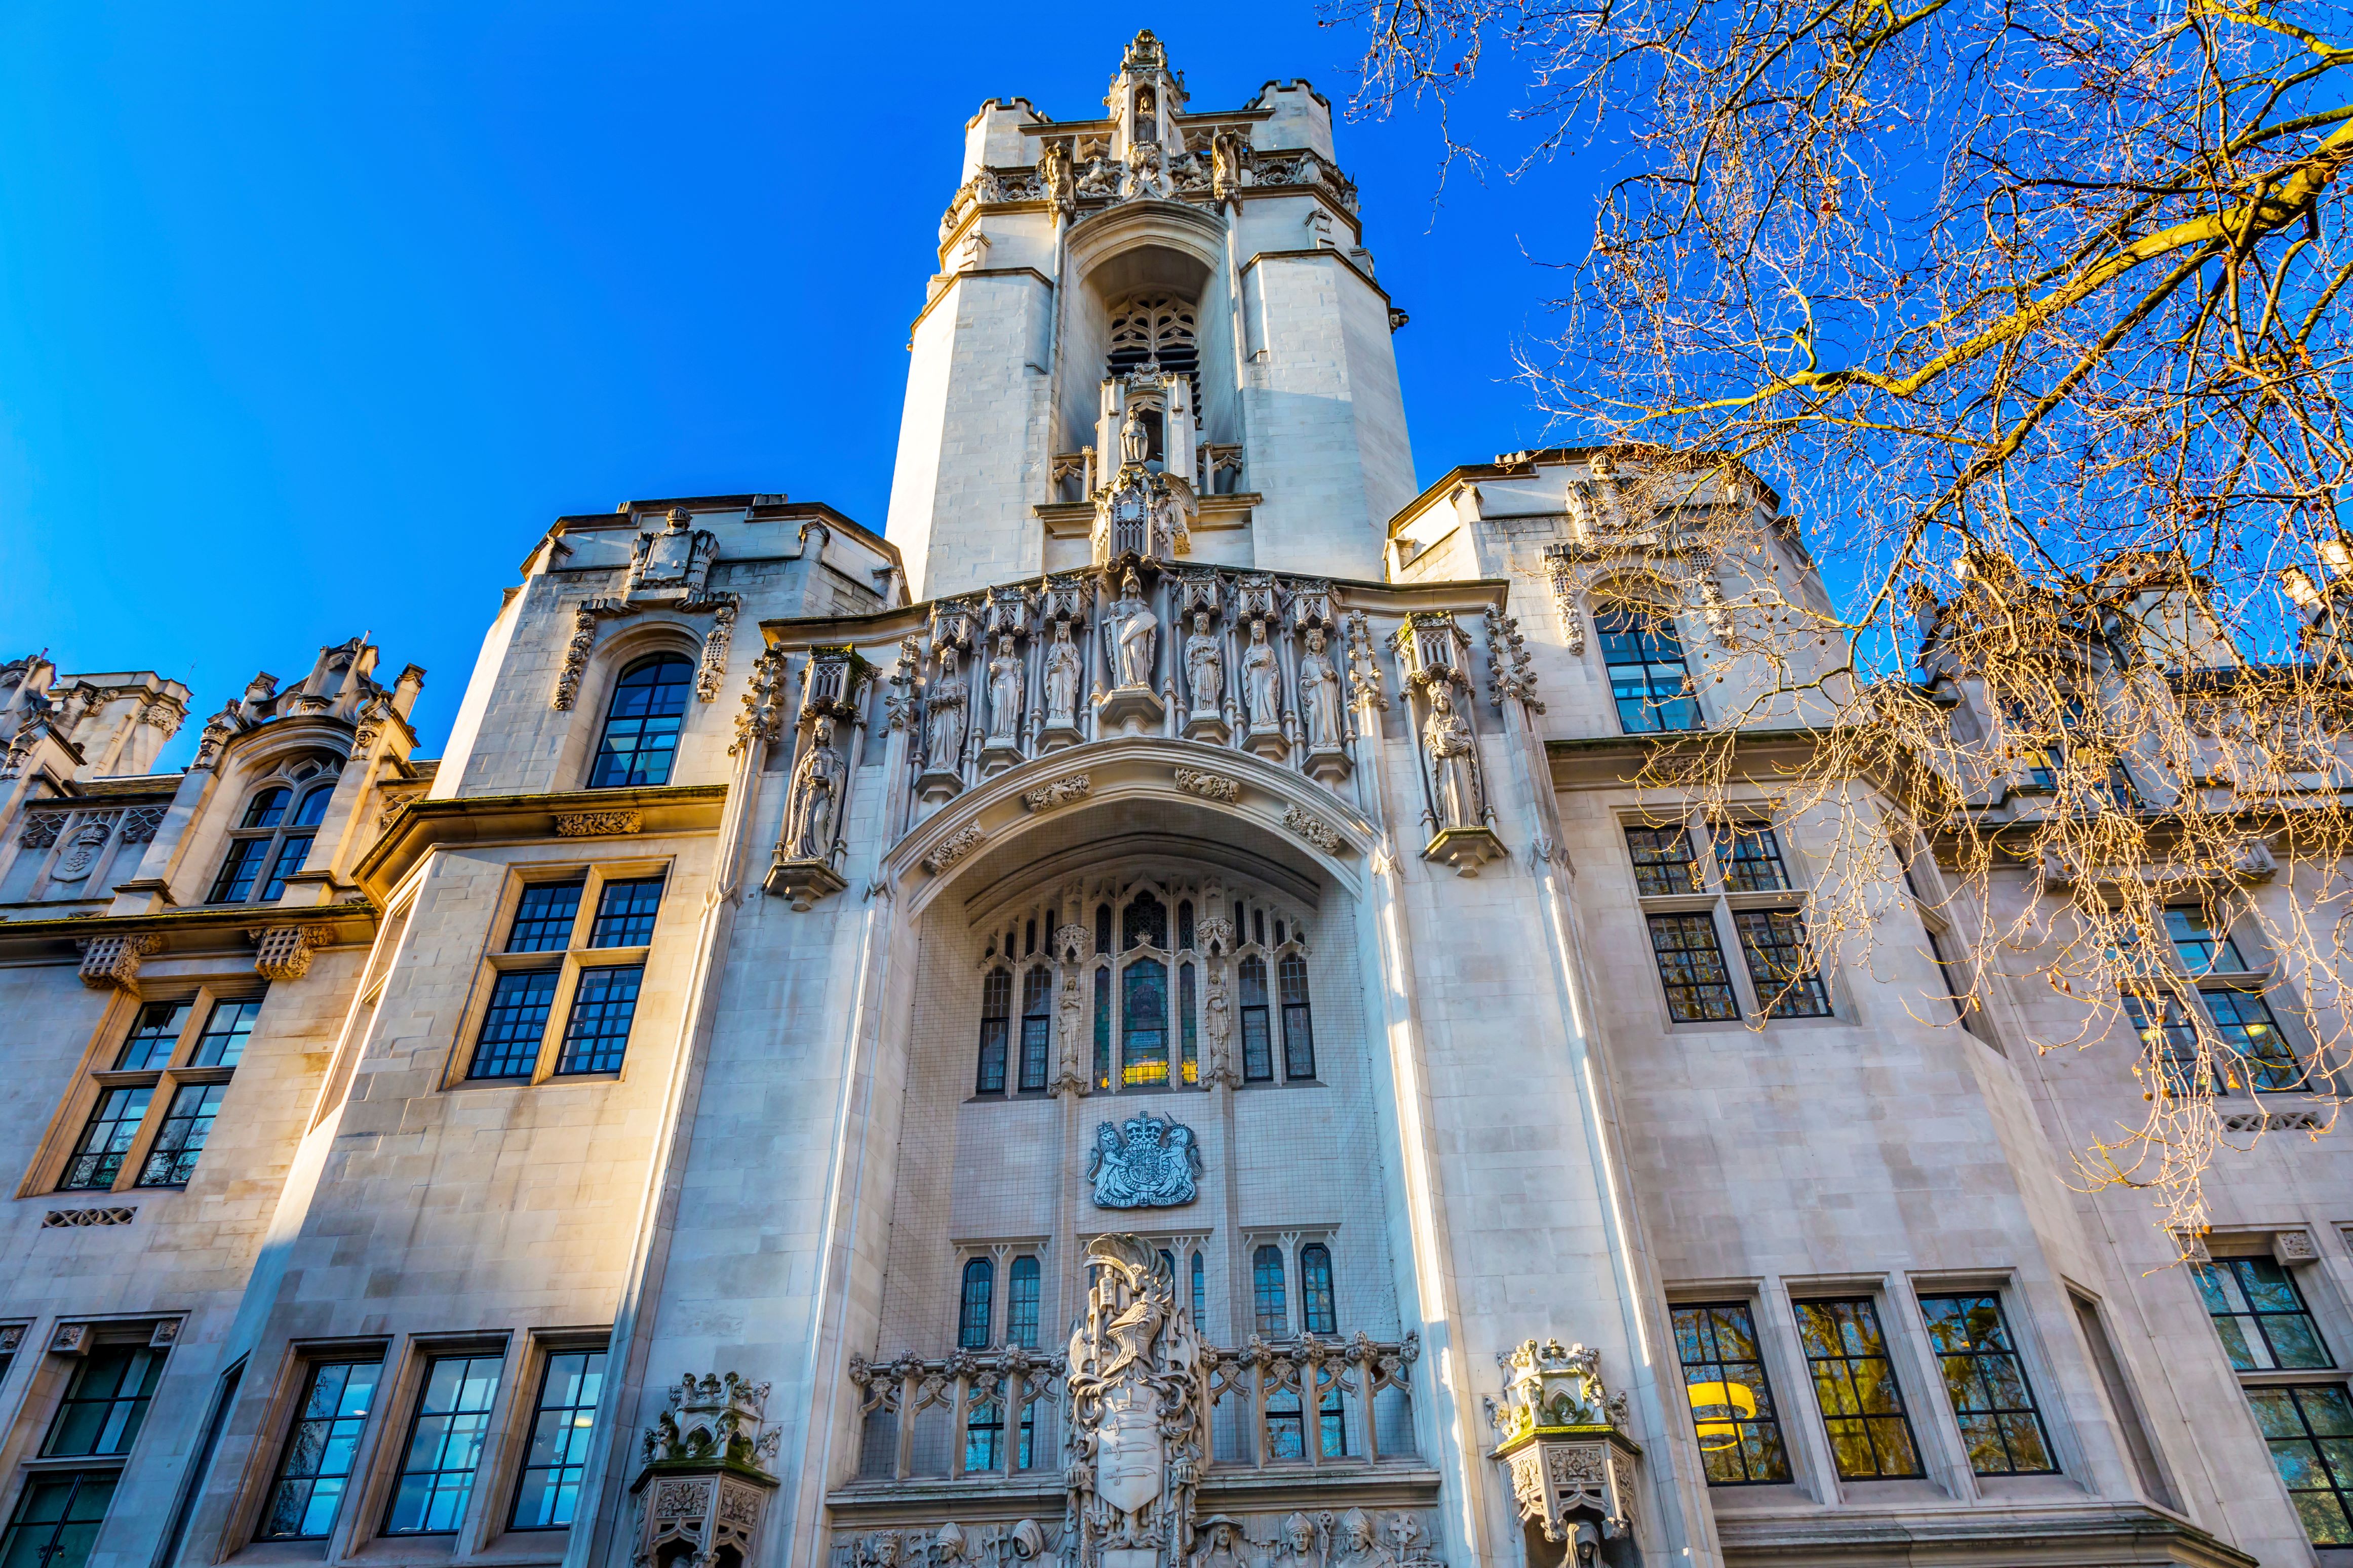 UK Supreme Court facade in sunlight